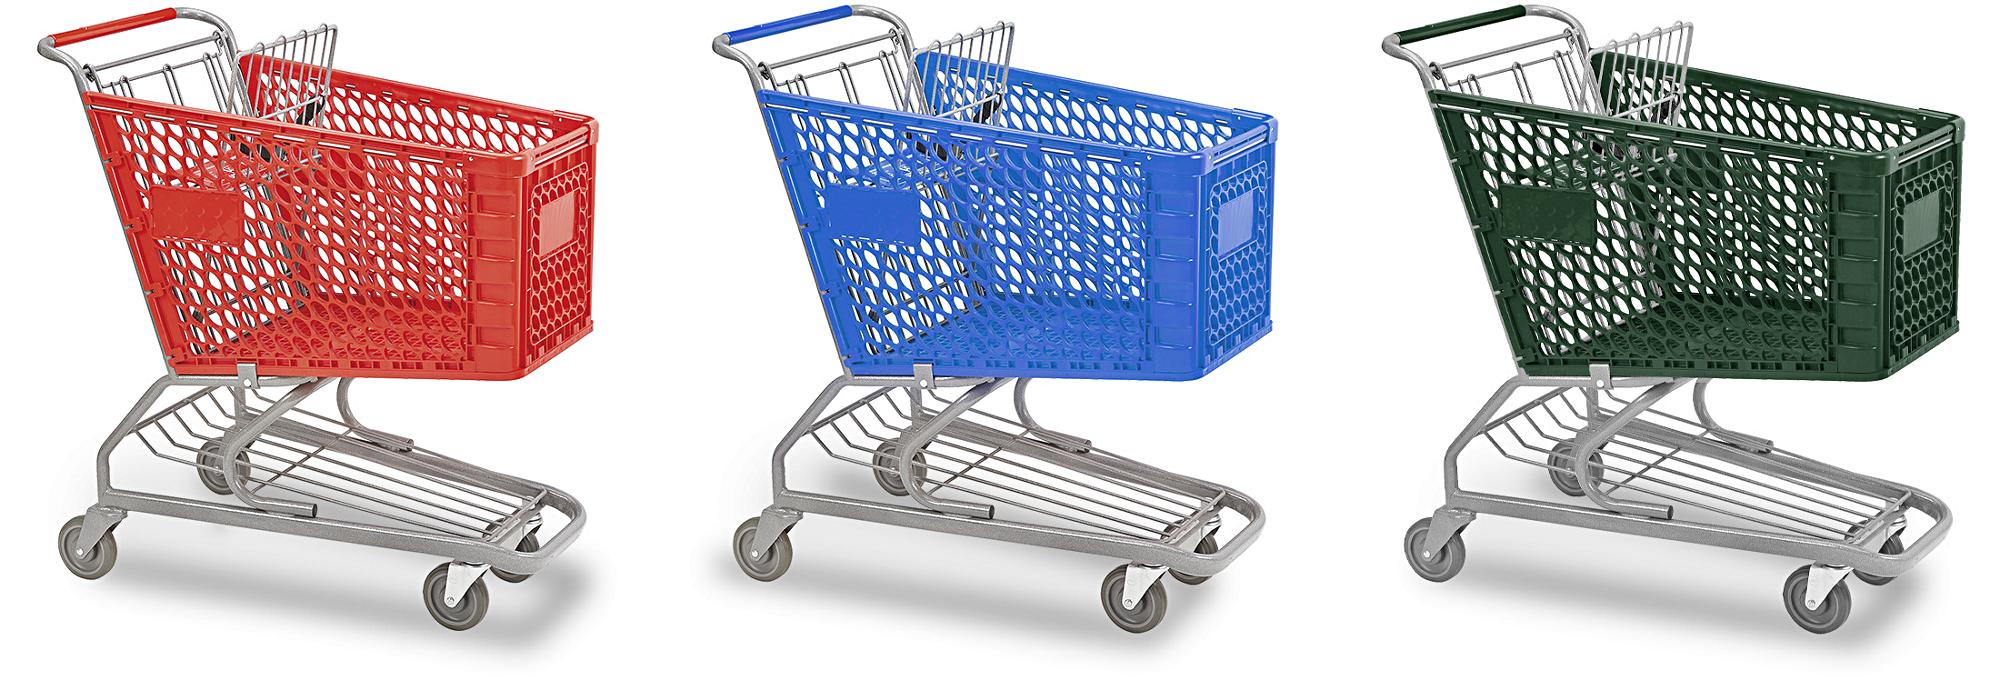 Plastic Shopping Carts